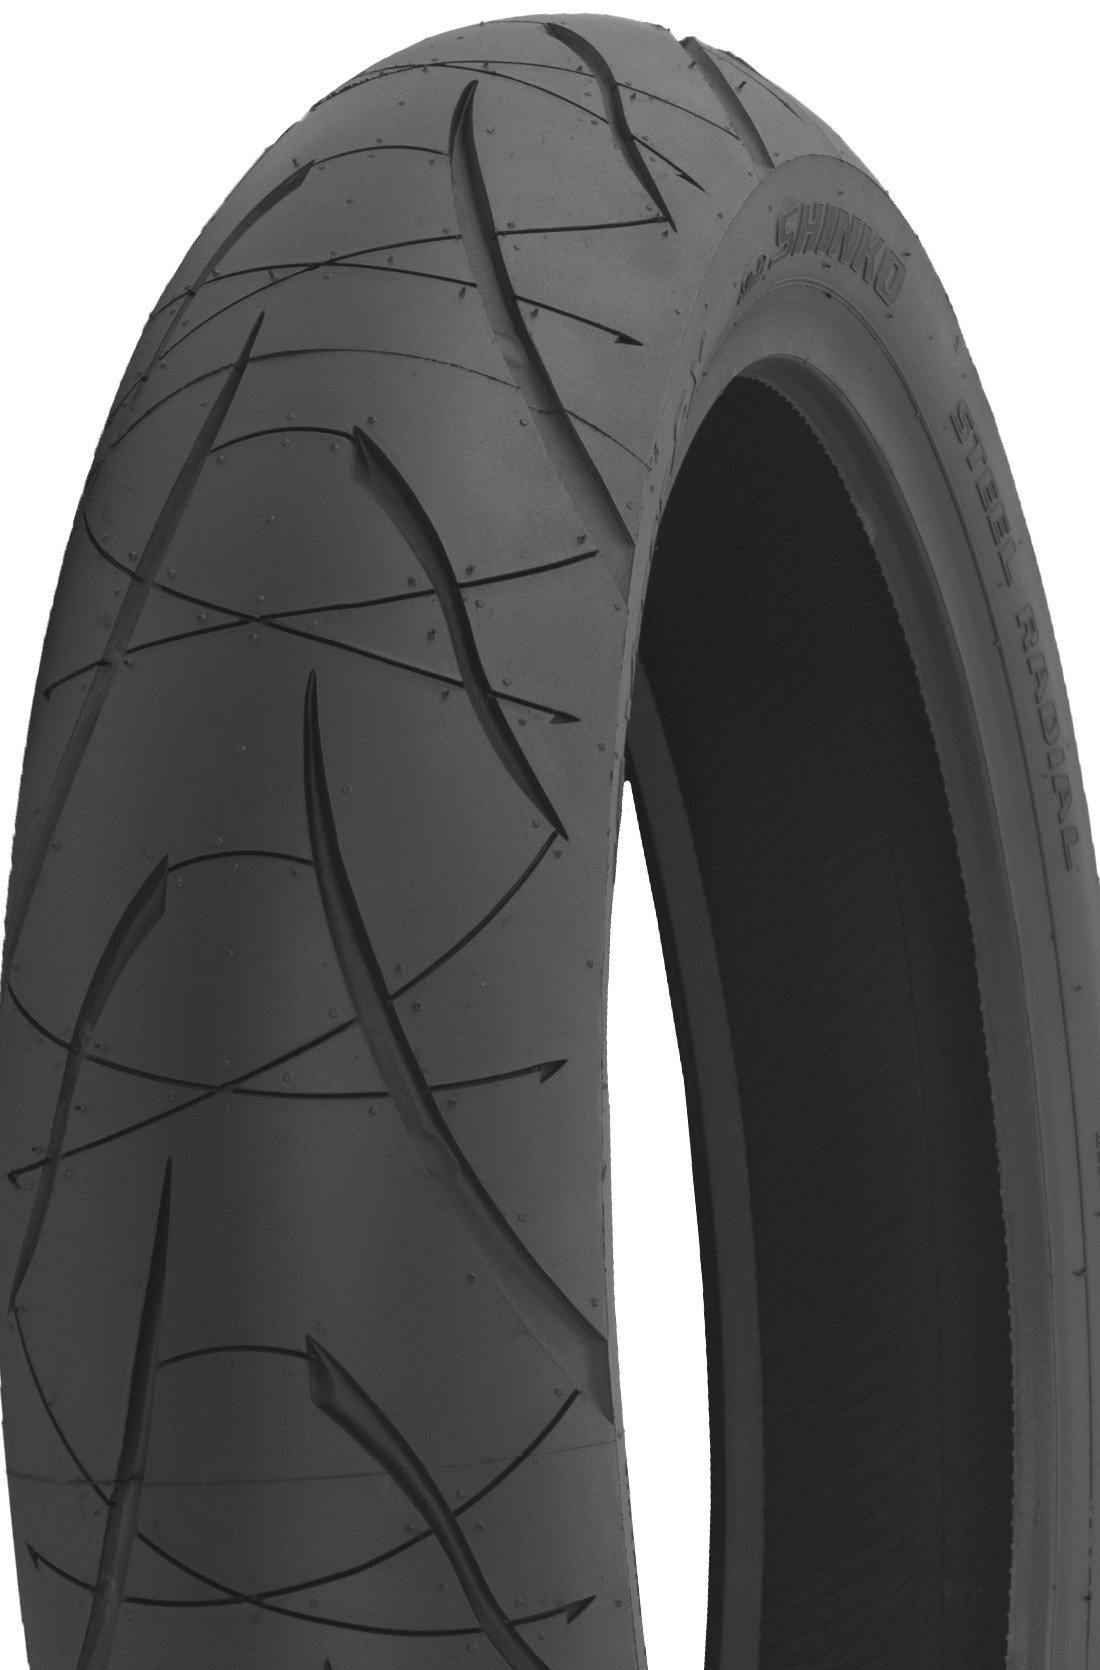 Shinko Tires R016 Series (200/50ZR-17) - Durian Bikers